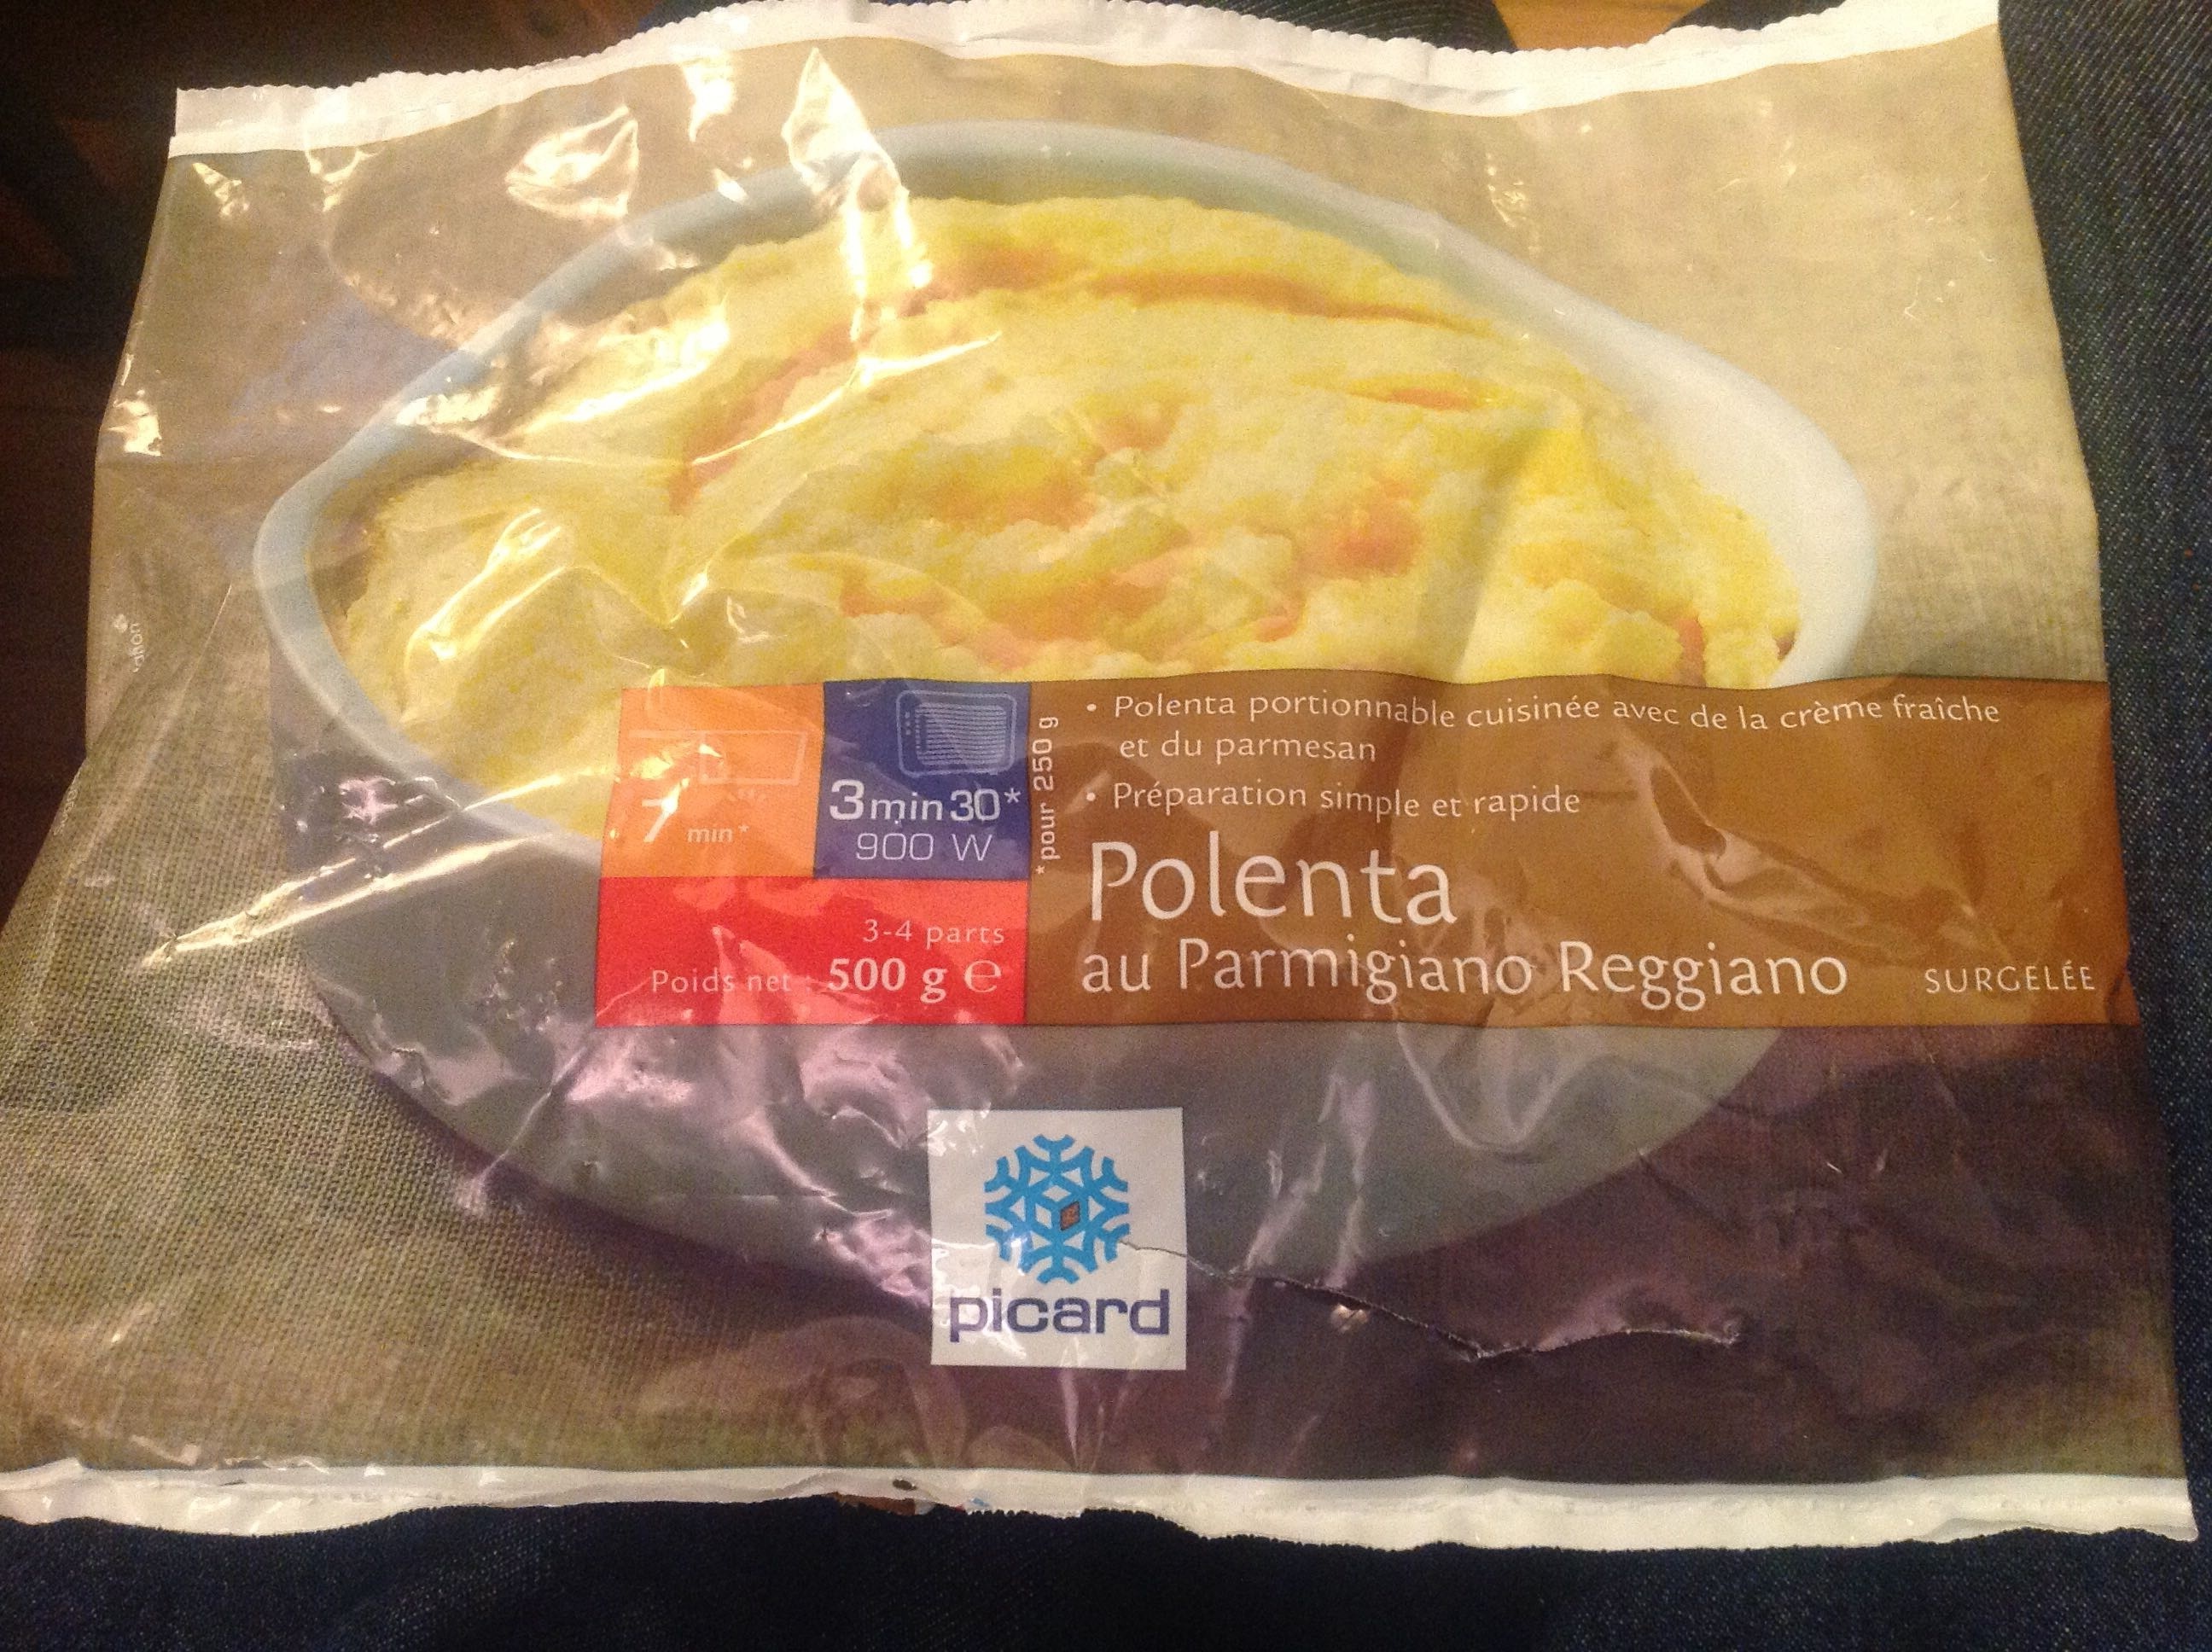 Polenta au Parmigiano Reggiano surgelée - Product - fr